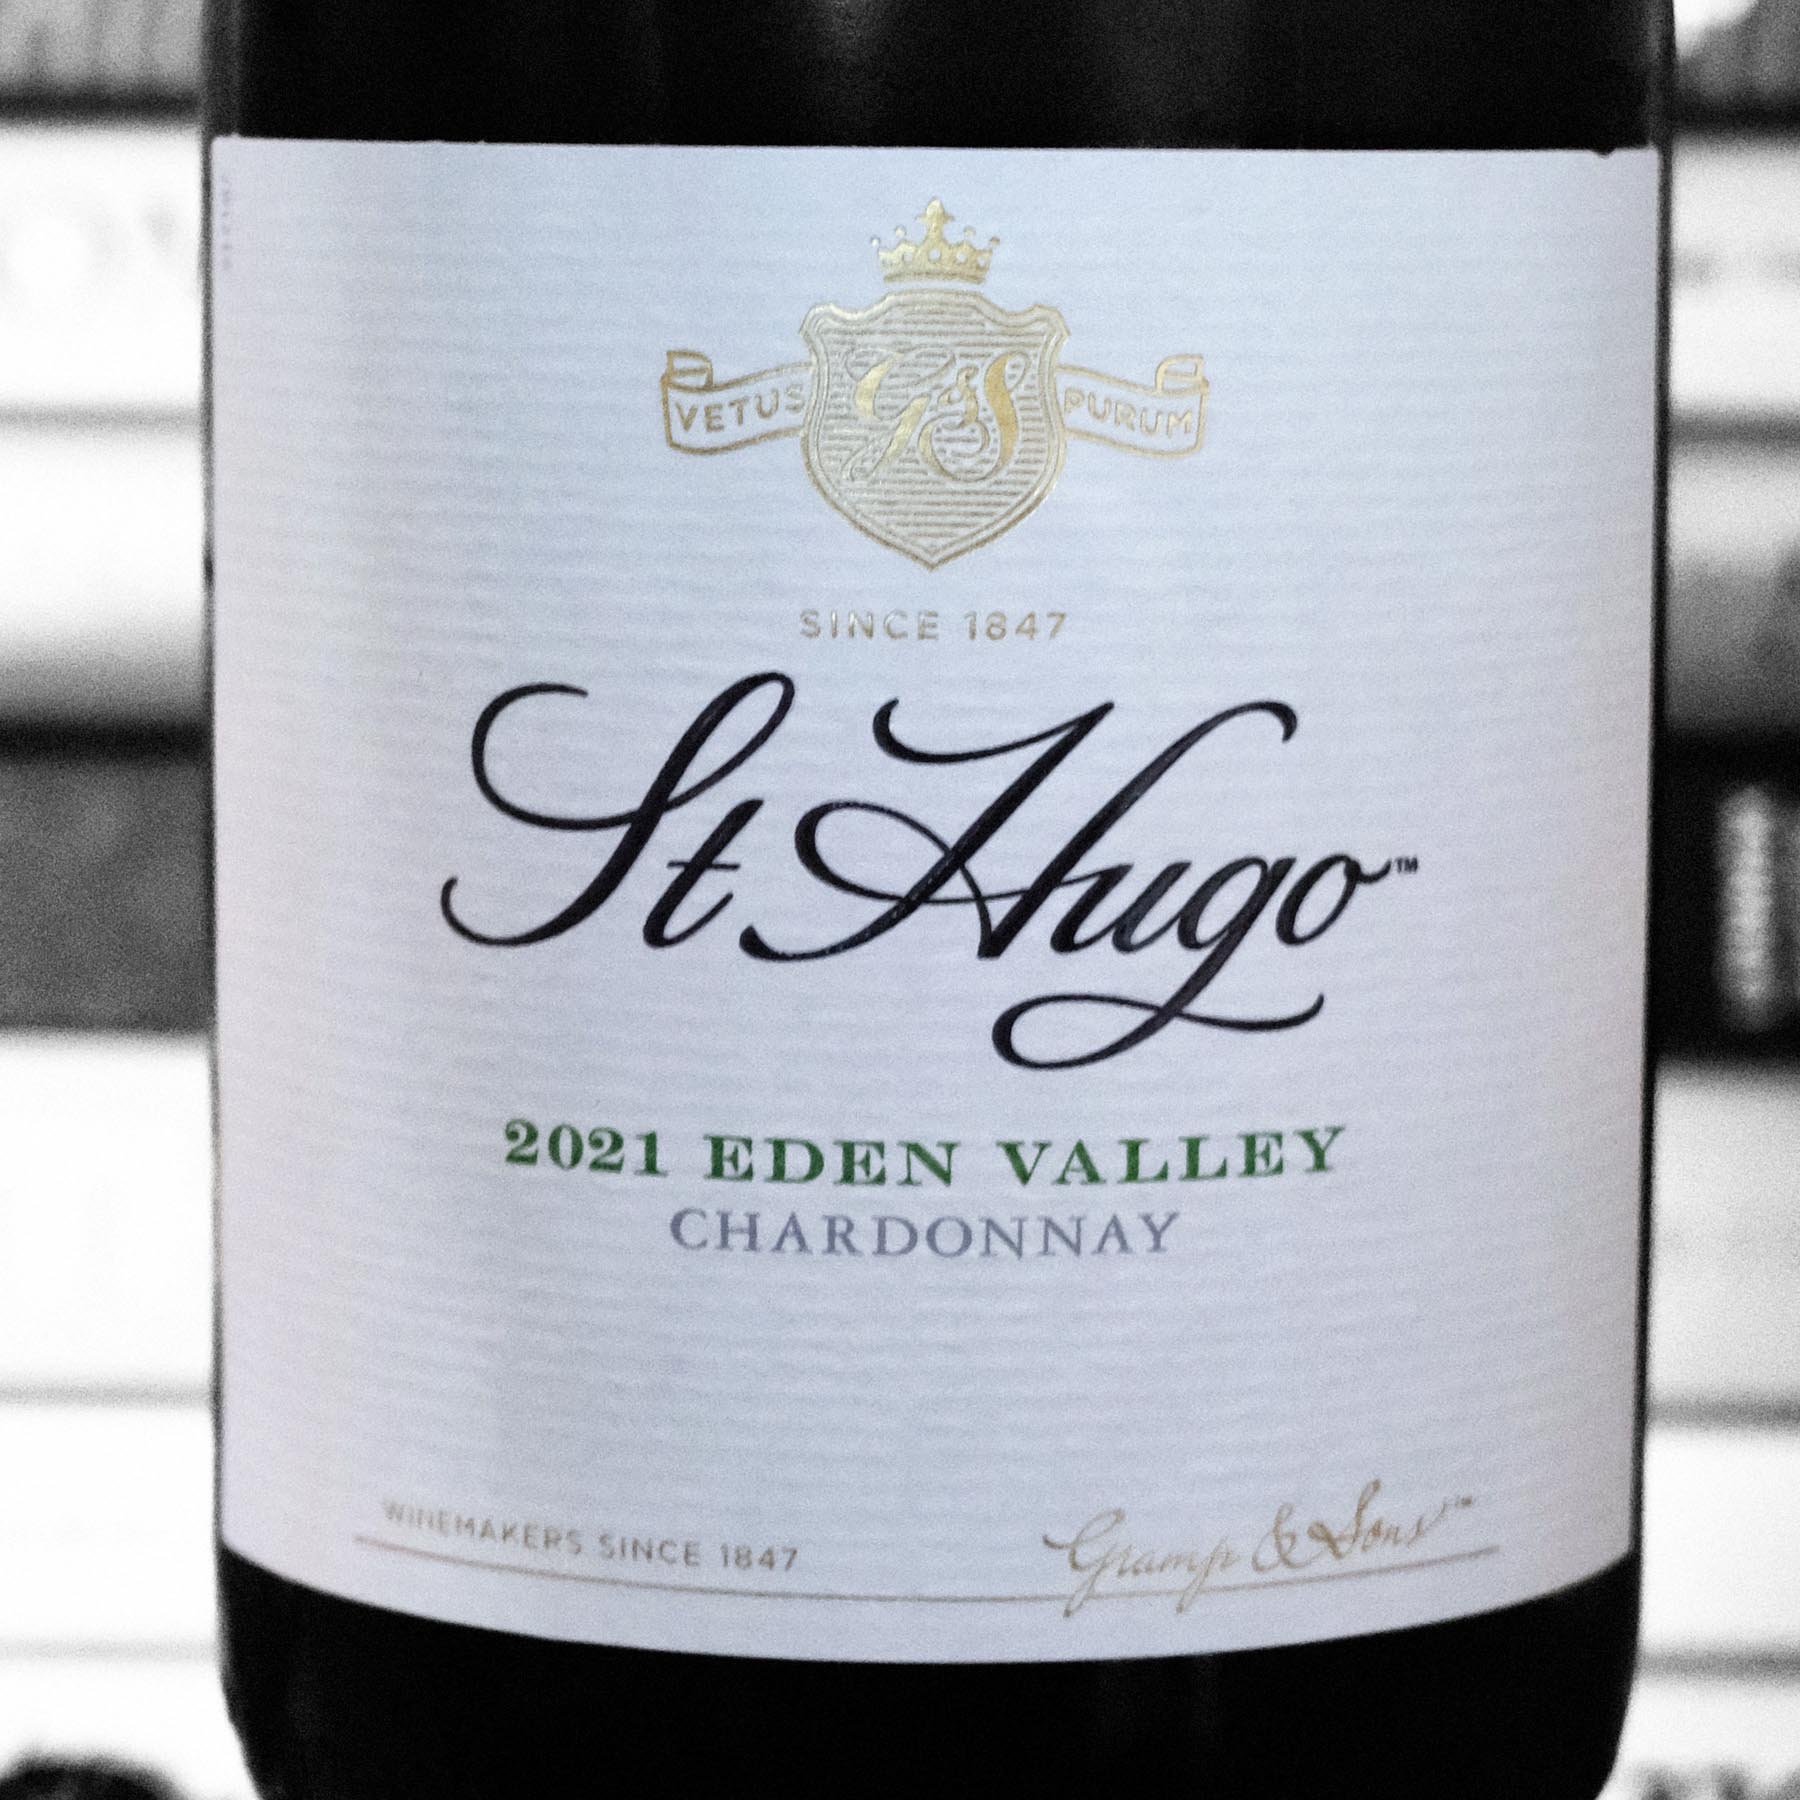 St Hugo Signature Collection Chardonnay 2021 Eden Valley, SA